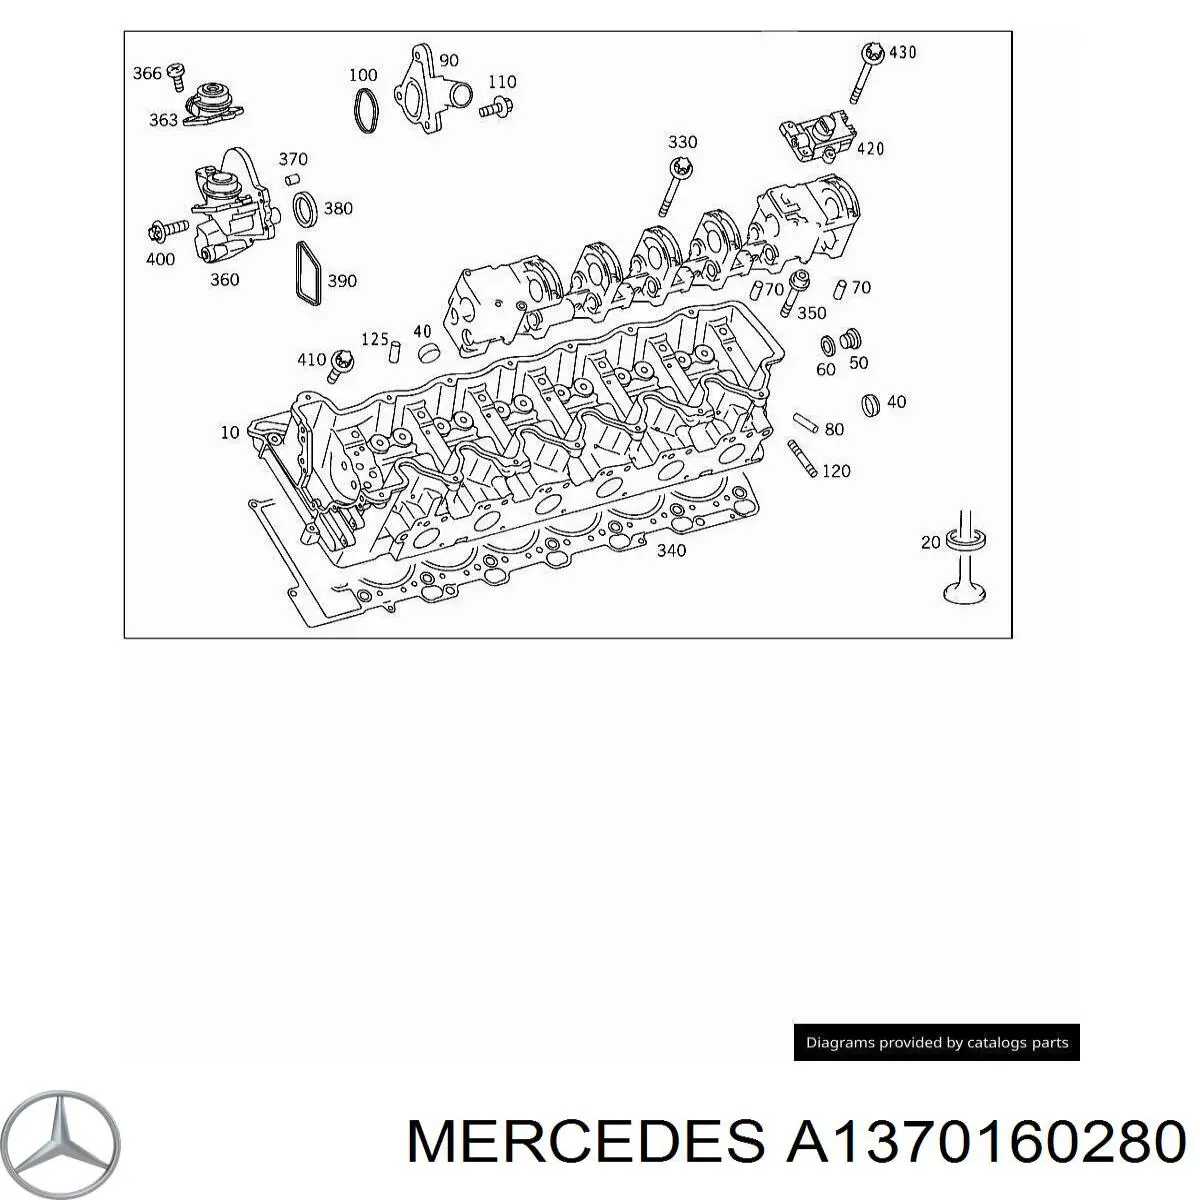 A1370160280 Mercedes 